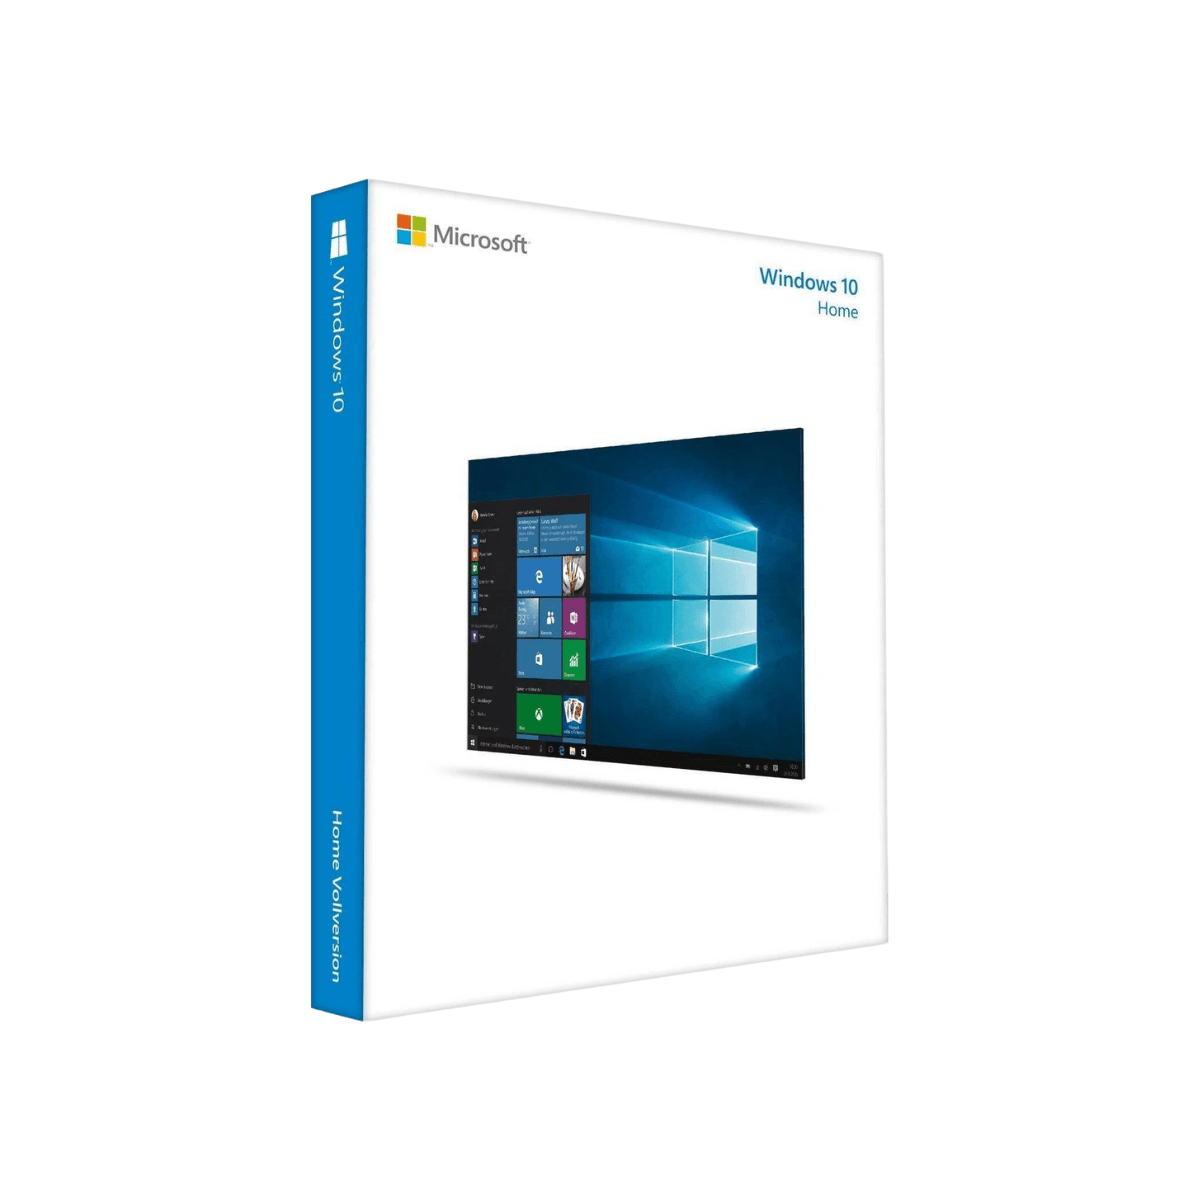 Microsoft Windows 10 Home - validvalley.com - Chave do produto, Chiave del prodotto, Clave del producto, Product Key, Produktschlüssel, Ürün Anahtarı